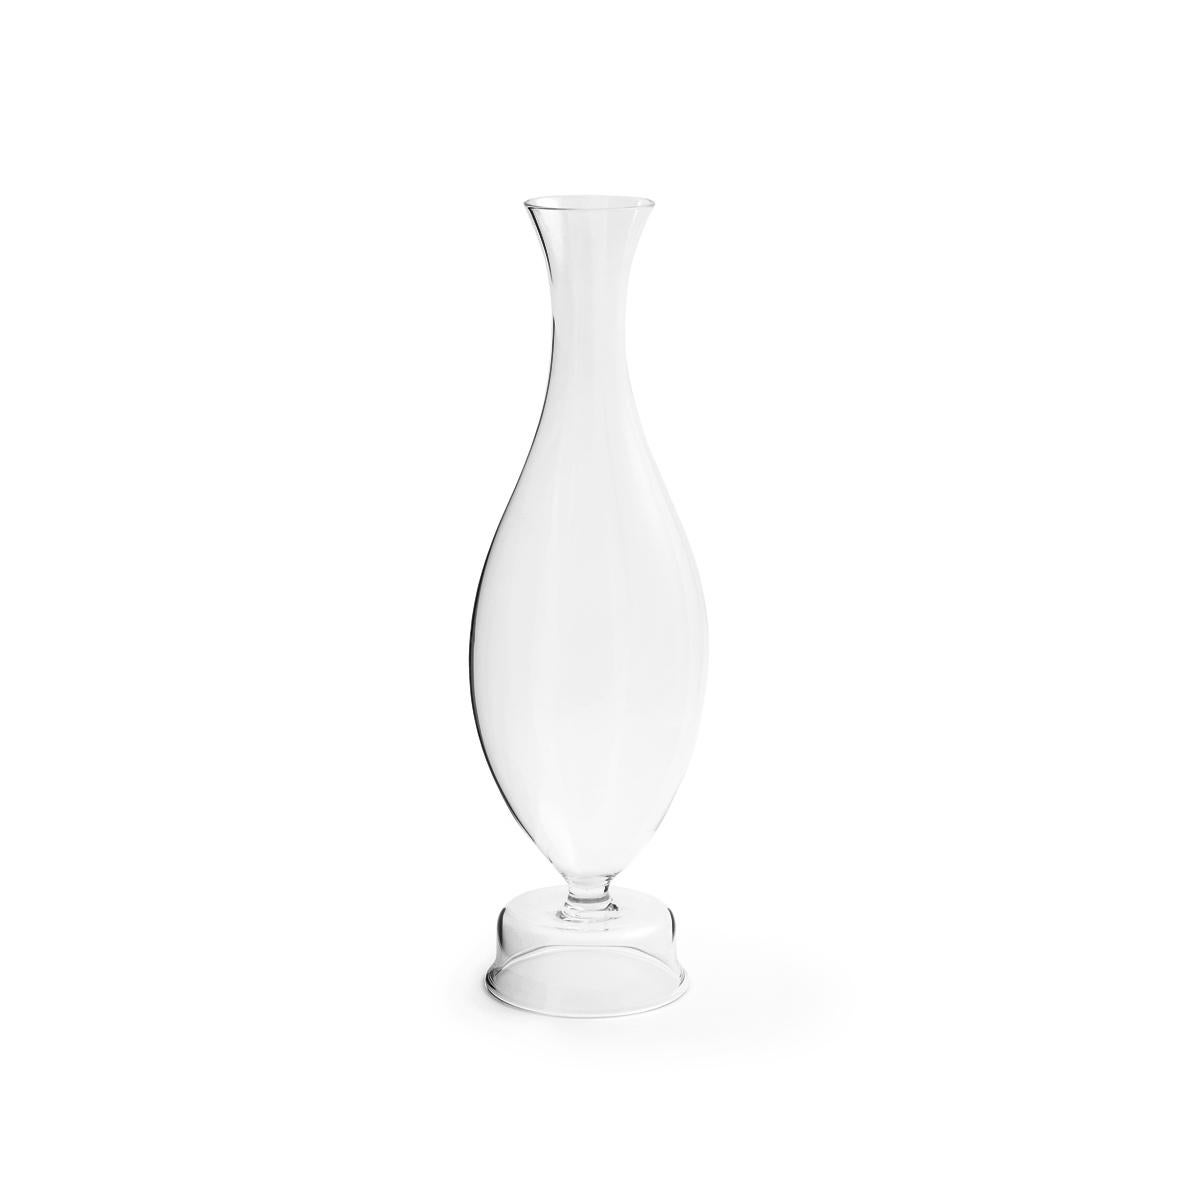 Italian Pims Mouth Blown Glass Bottle / Vase Designed by Aldo Cibic For Sale